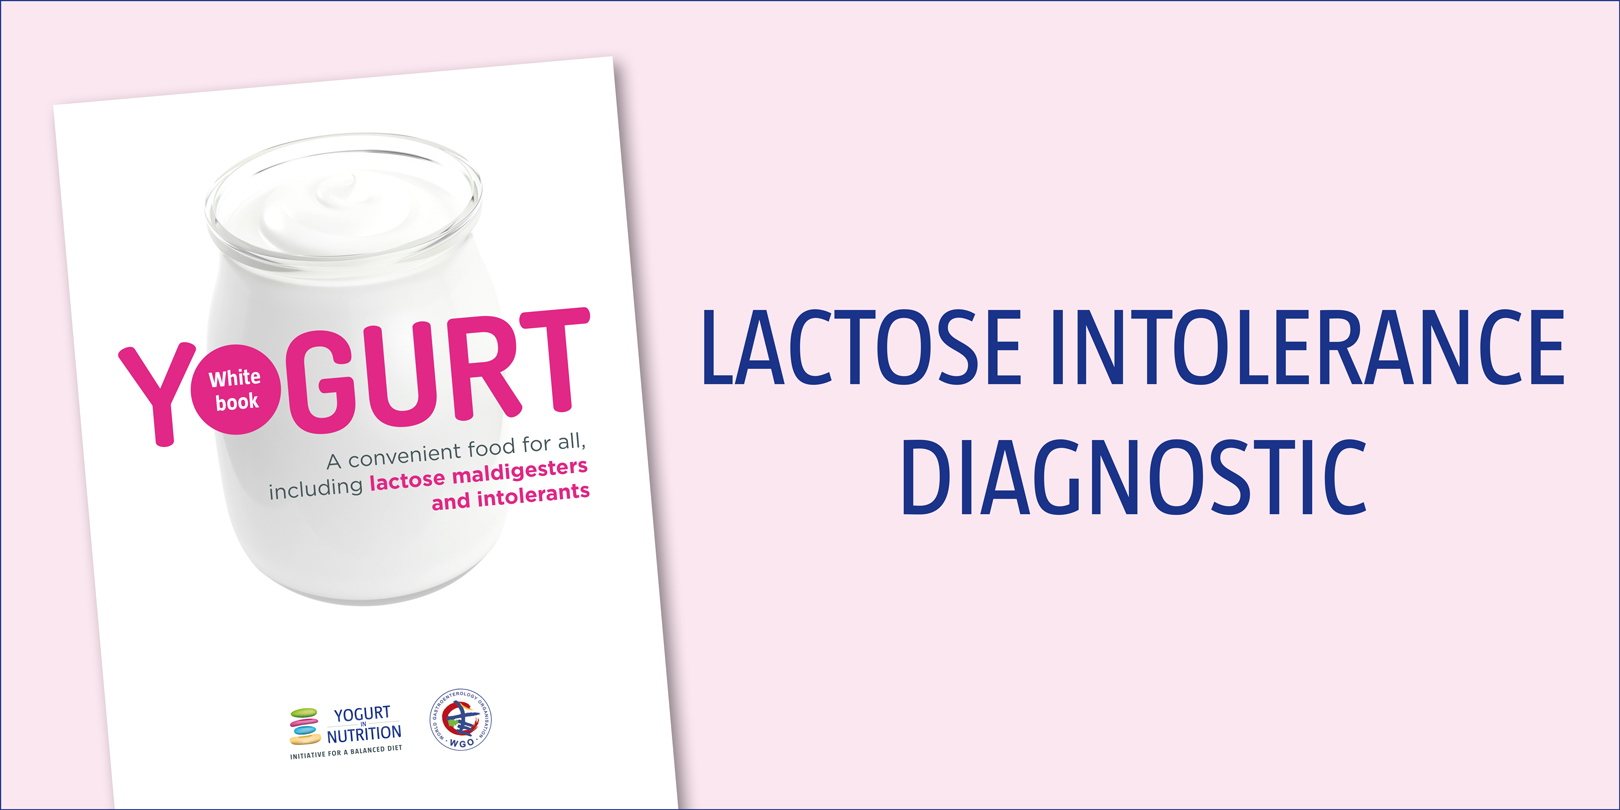 Lactose intolerance diagnostic Yogurt in Nutrition